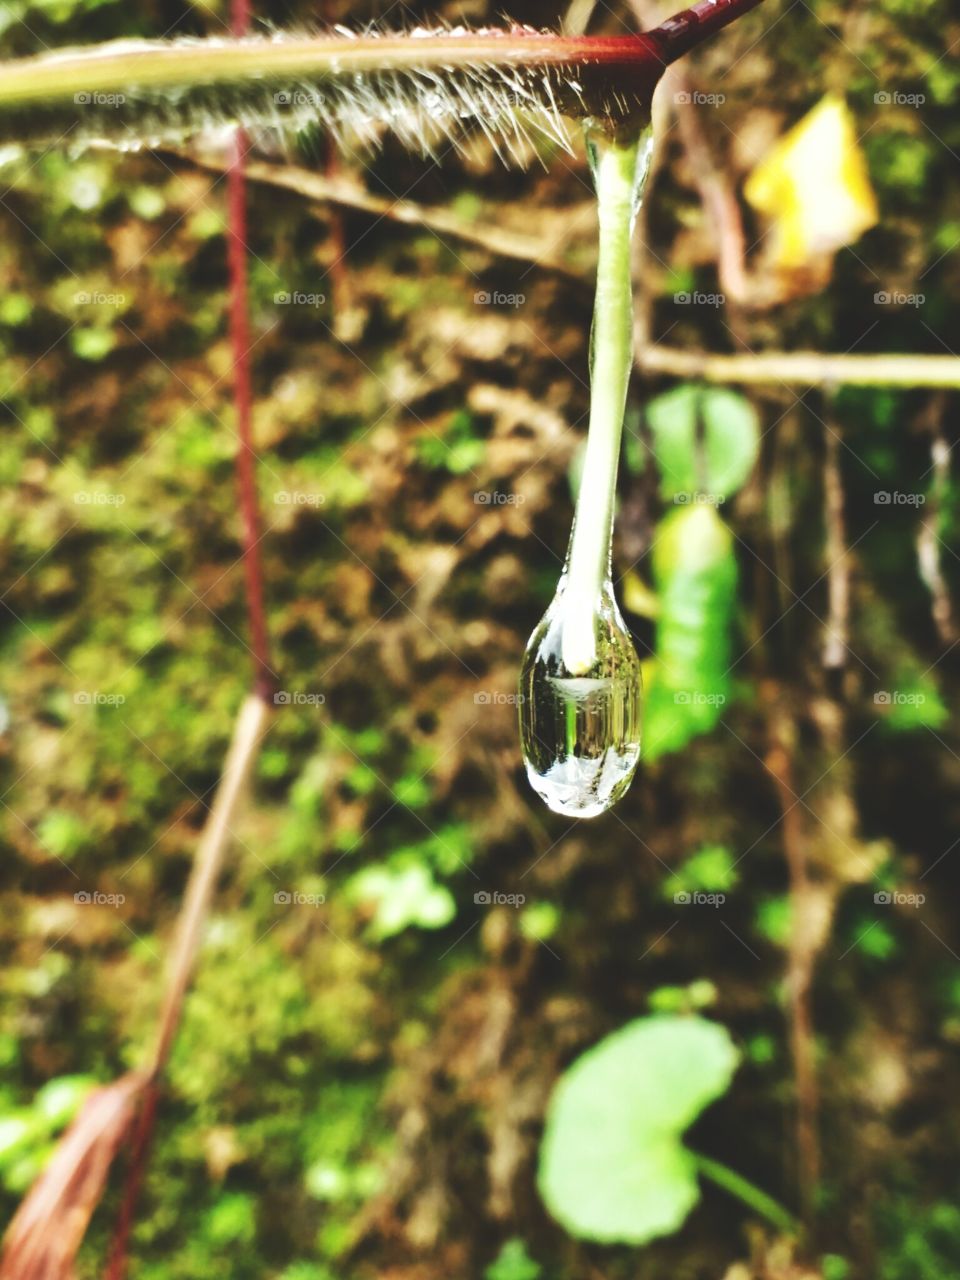 rain drop hanging on grass root